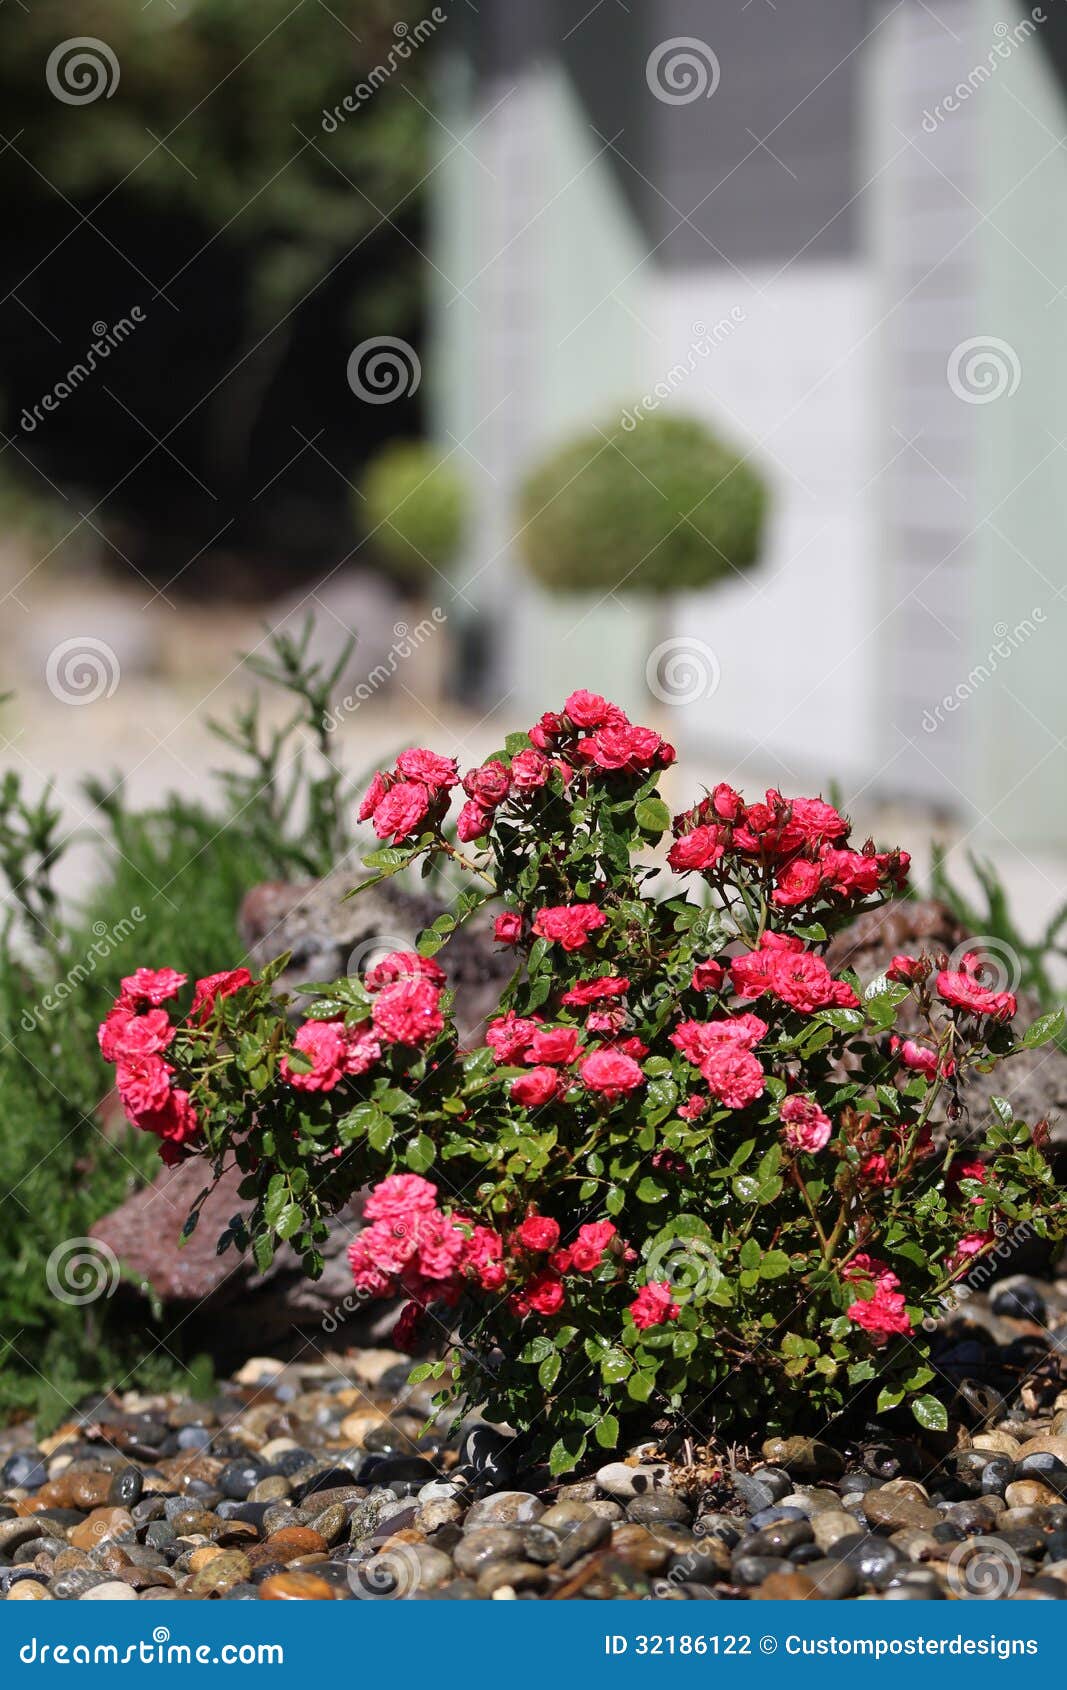 miniature rose bush front yard landscape roses front house 32186122 